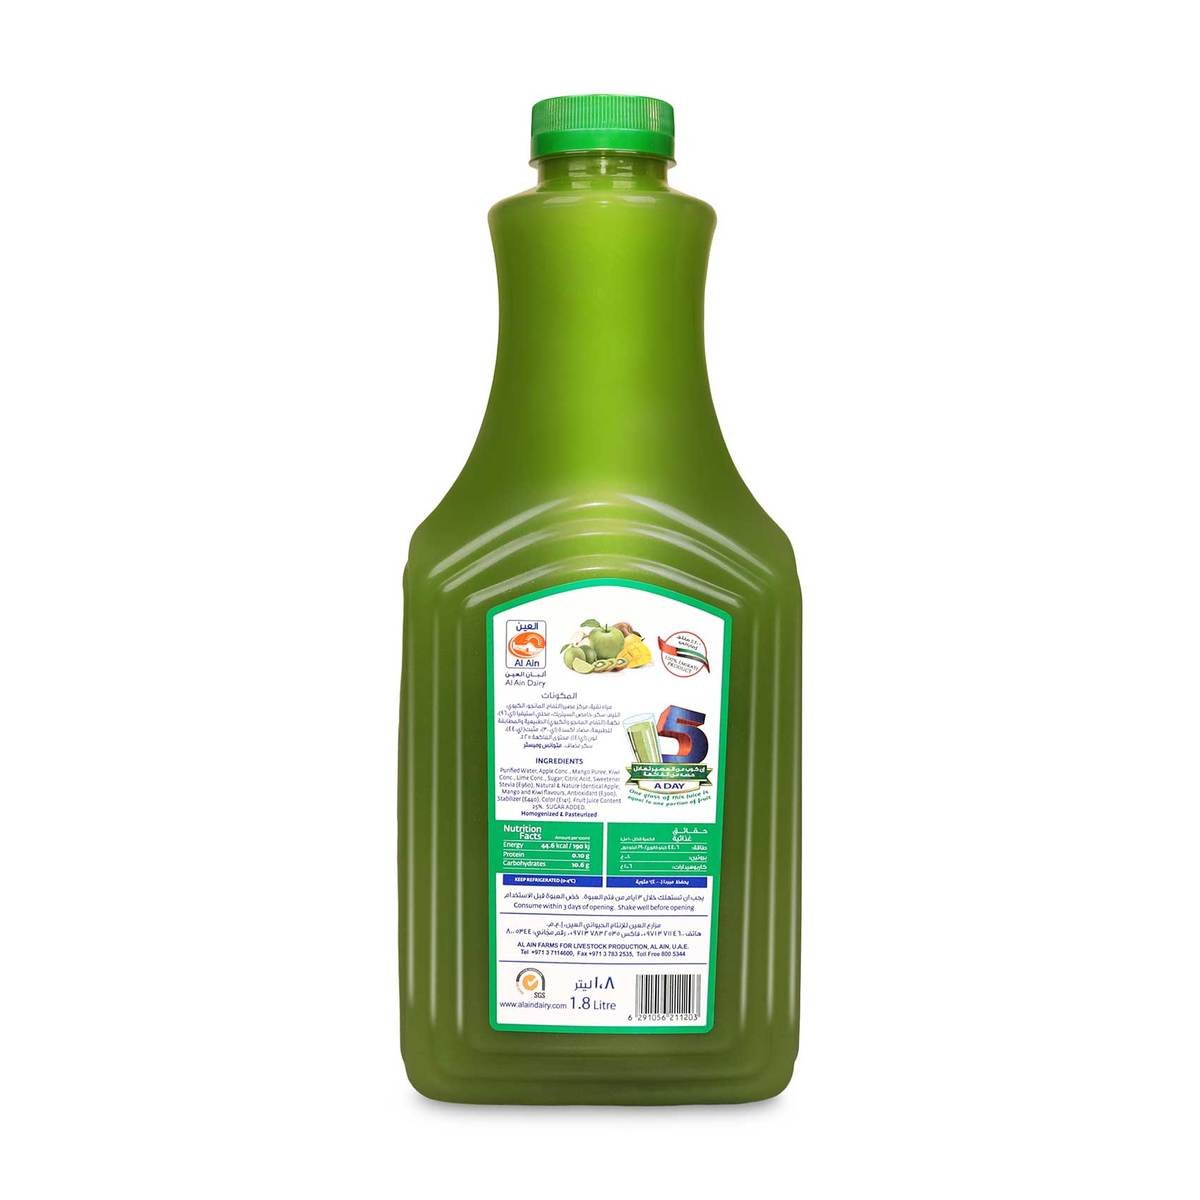 Al Ain Green Cocktail Nectar 1.8 Litres